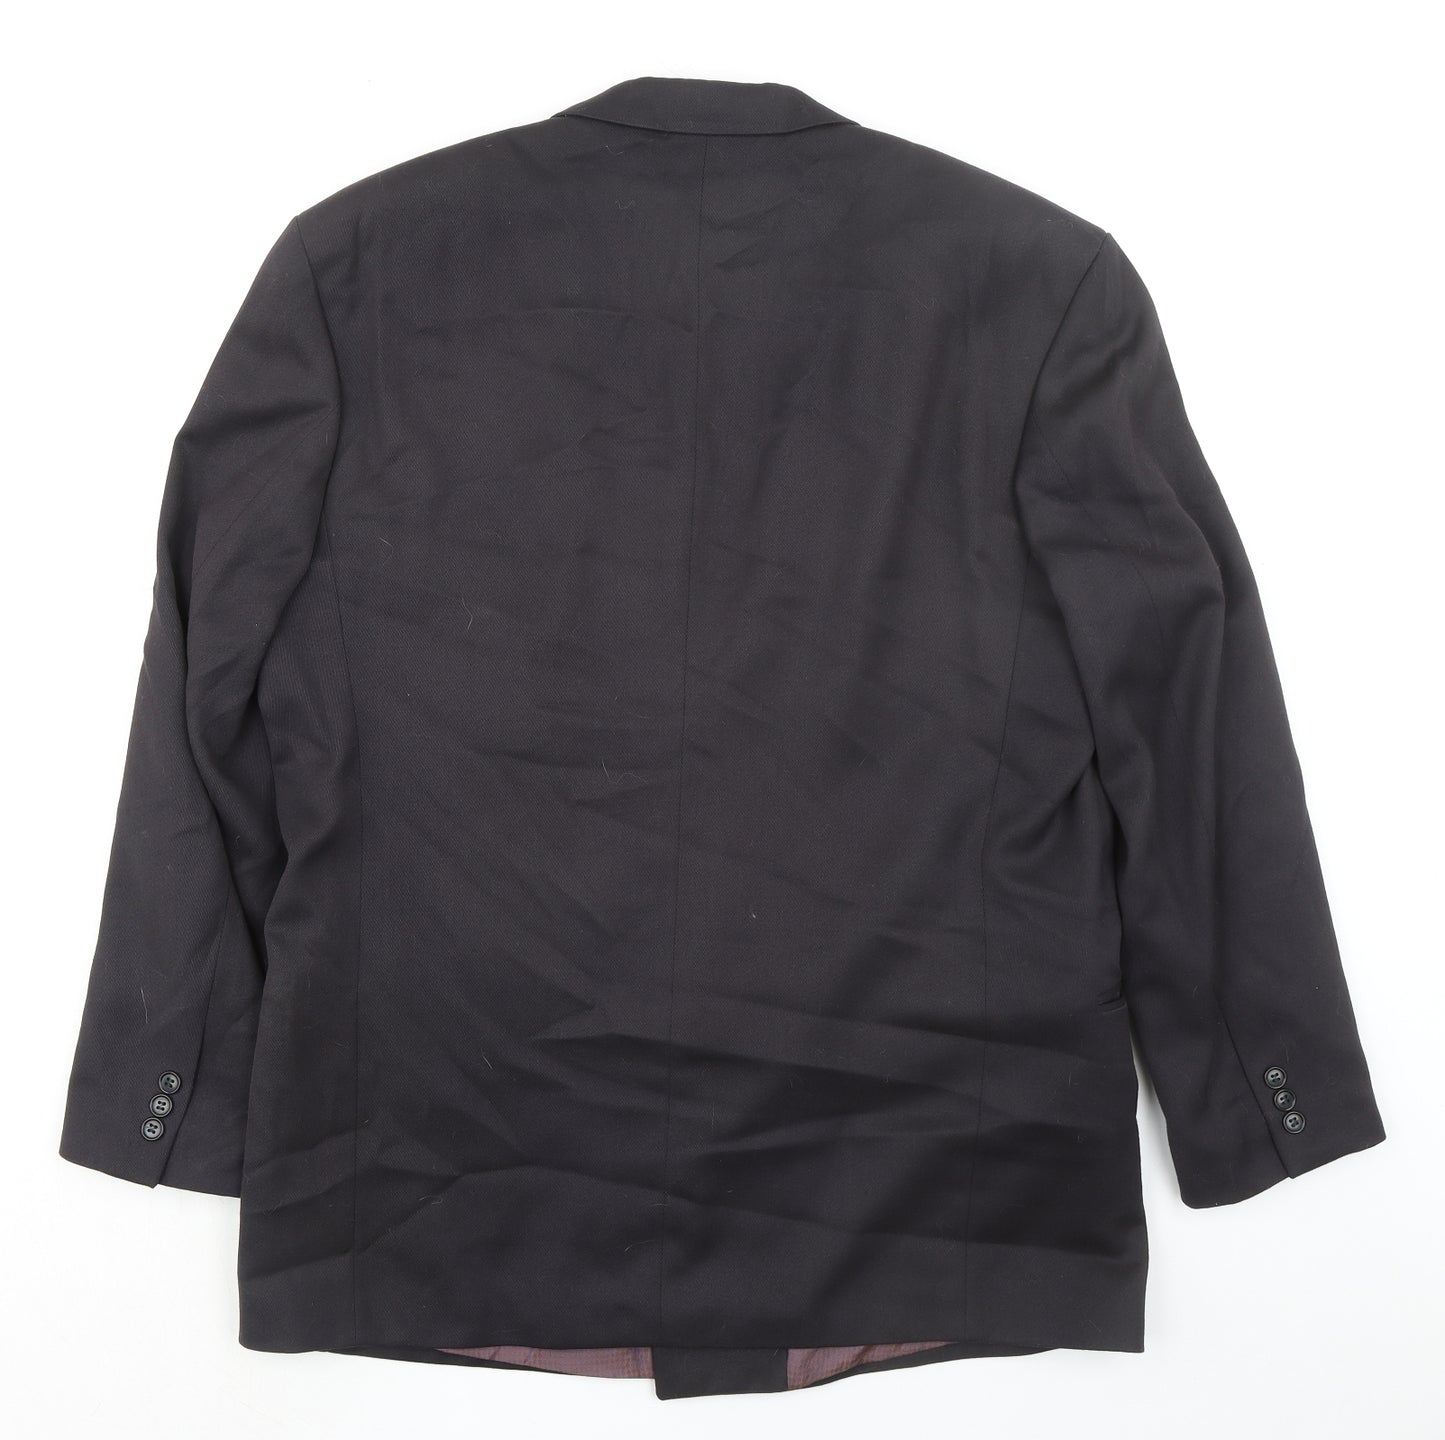 Corman Mens Black Polyester Jacket Suit Jacket Size 44 Regular